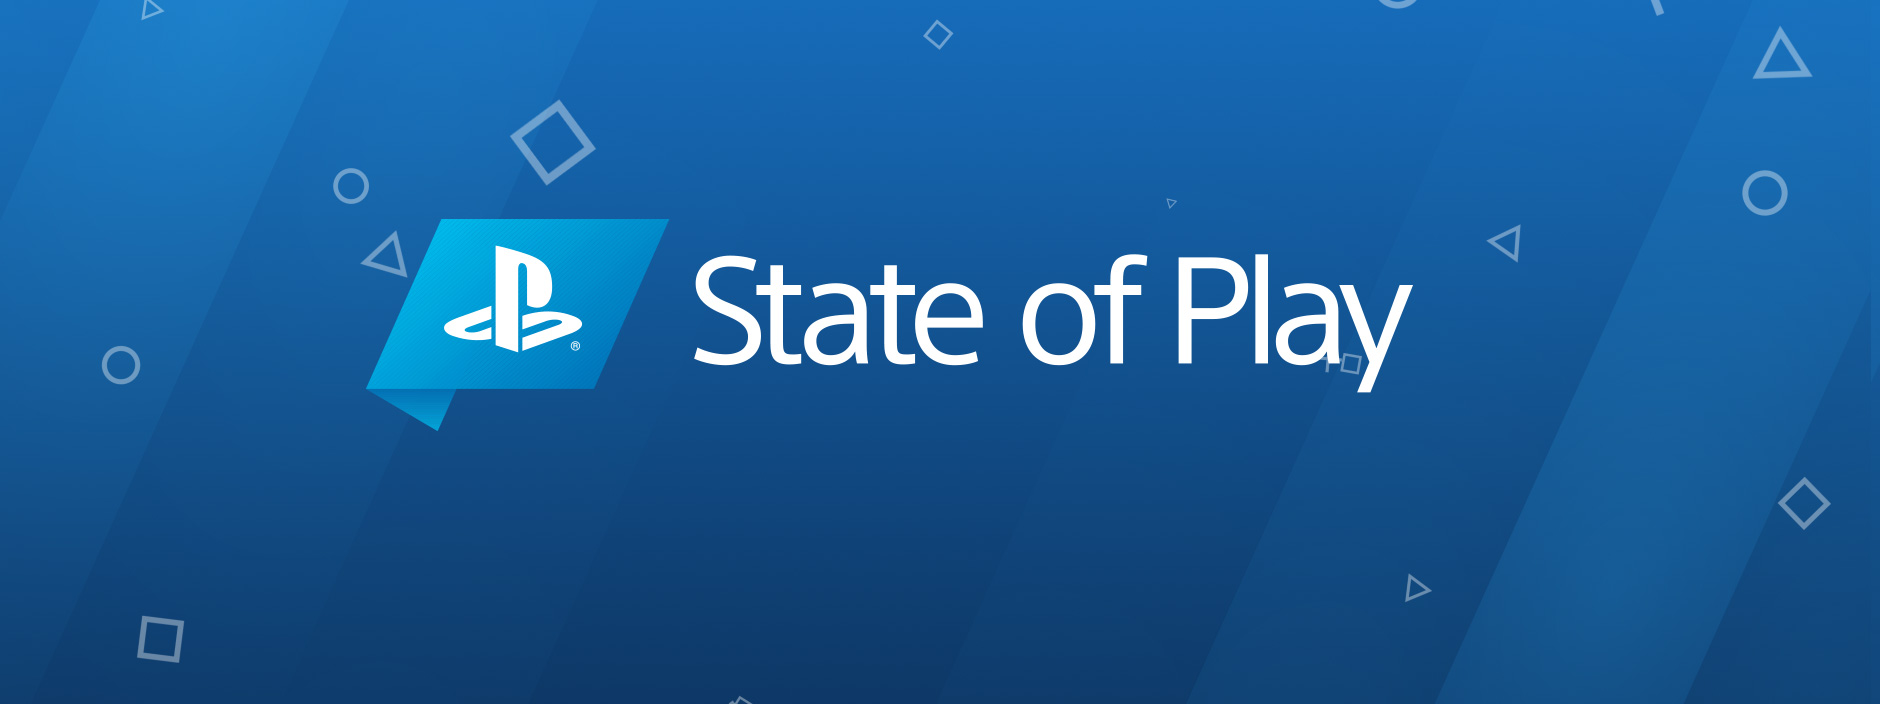 State of Play | Confira as novidades VR anunciadas